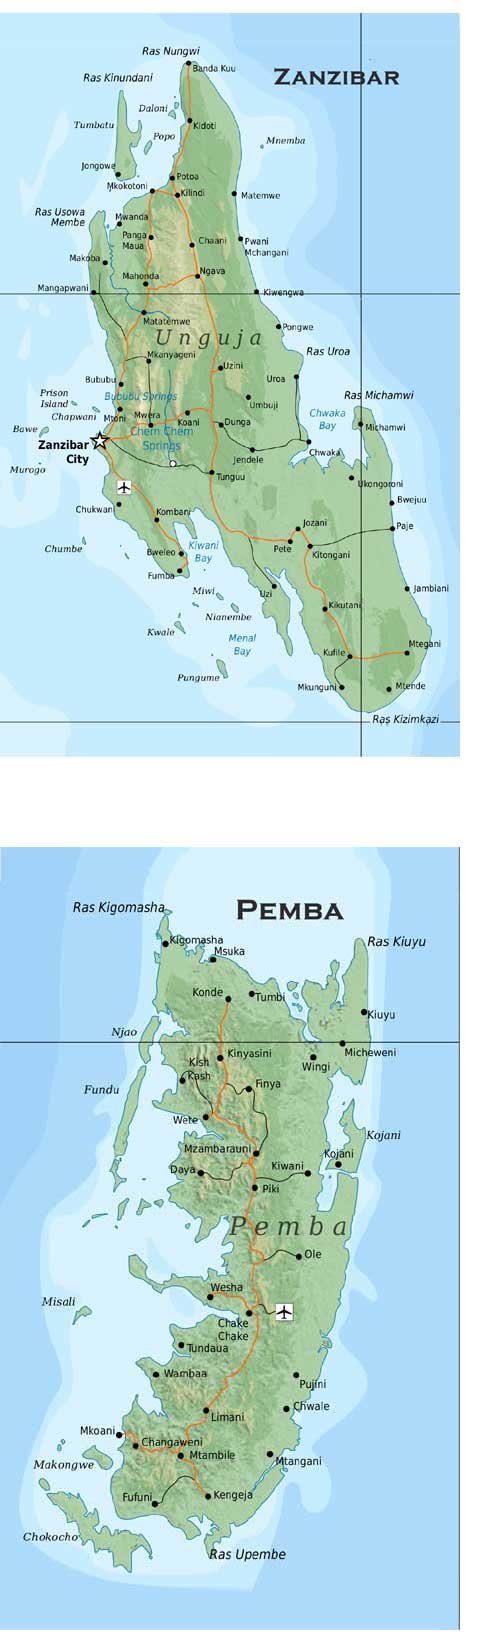 Map of Zanzibar and Pemba Islands